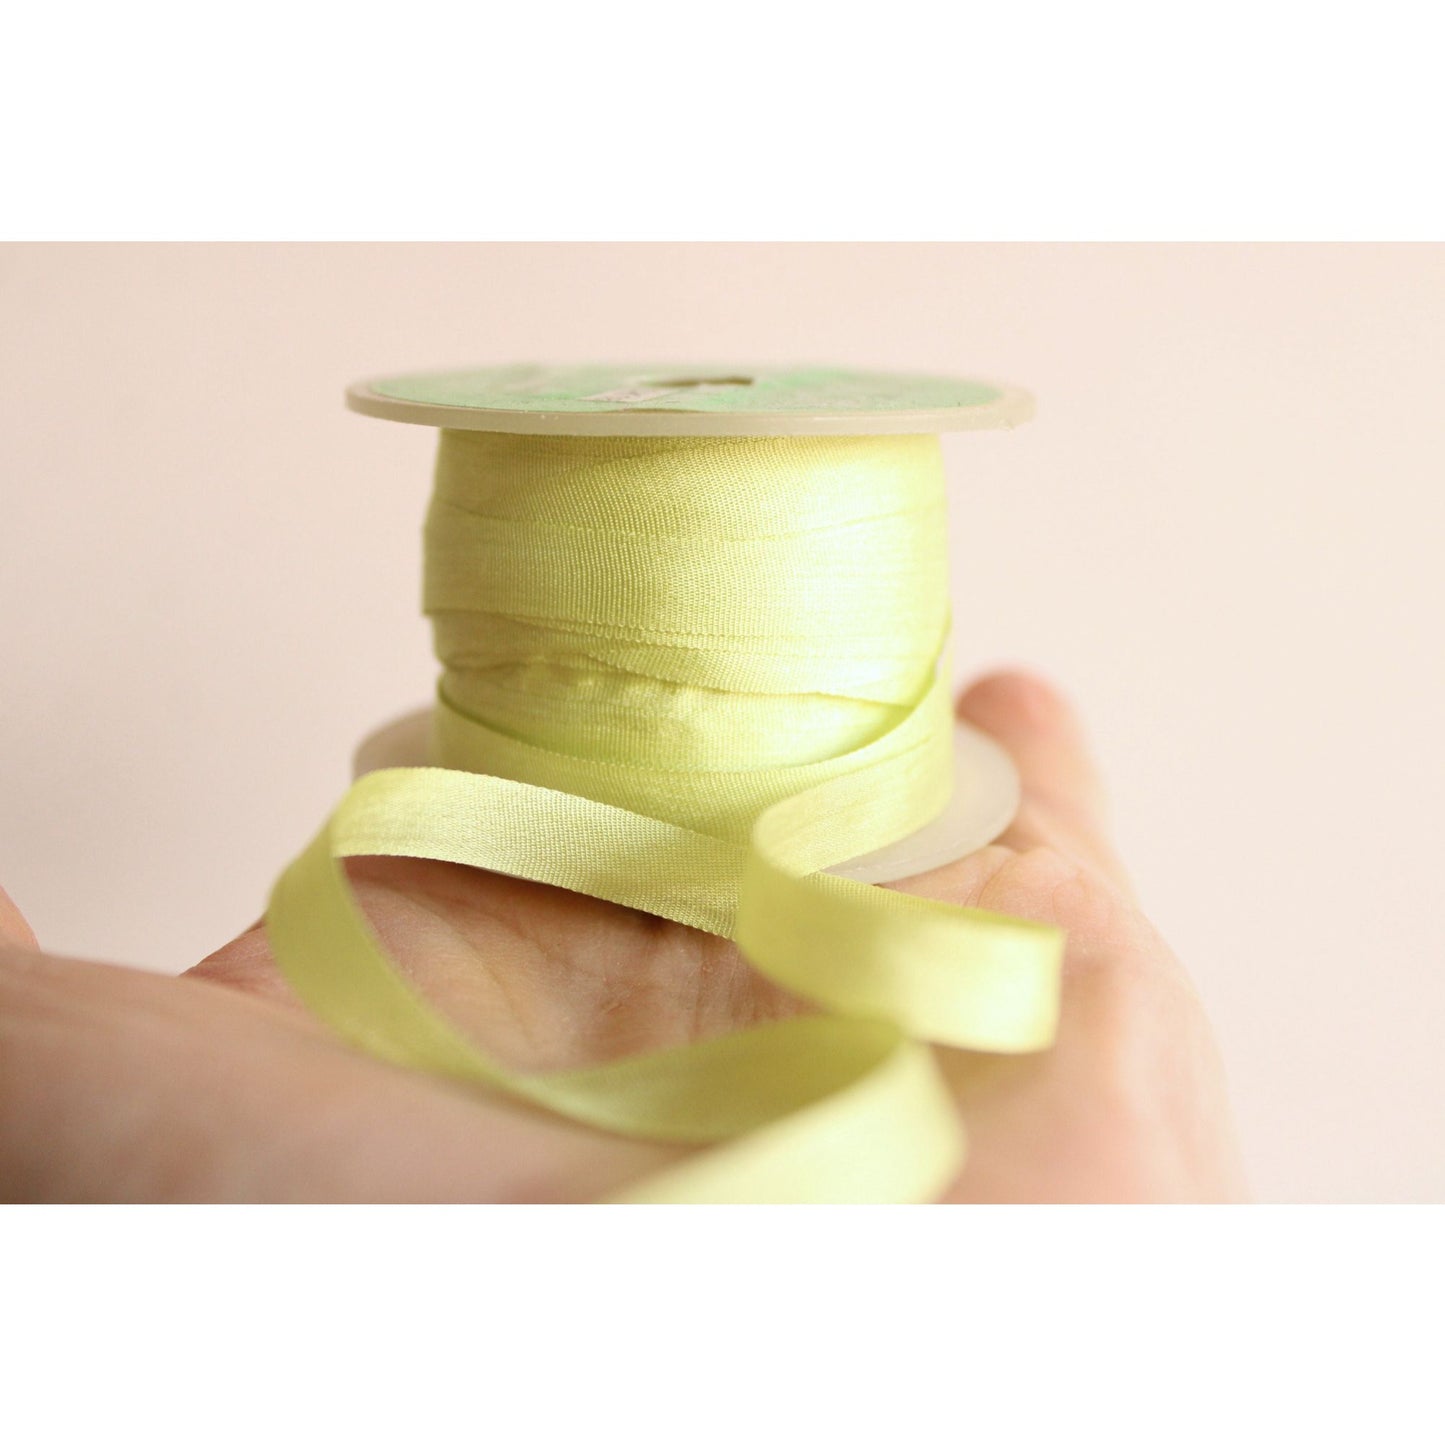 Silk Ribbon in Apple Green 7mm Narrow Trim / 1/4" Wide, Five Yards